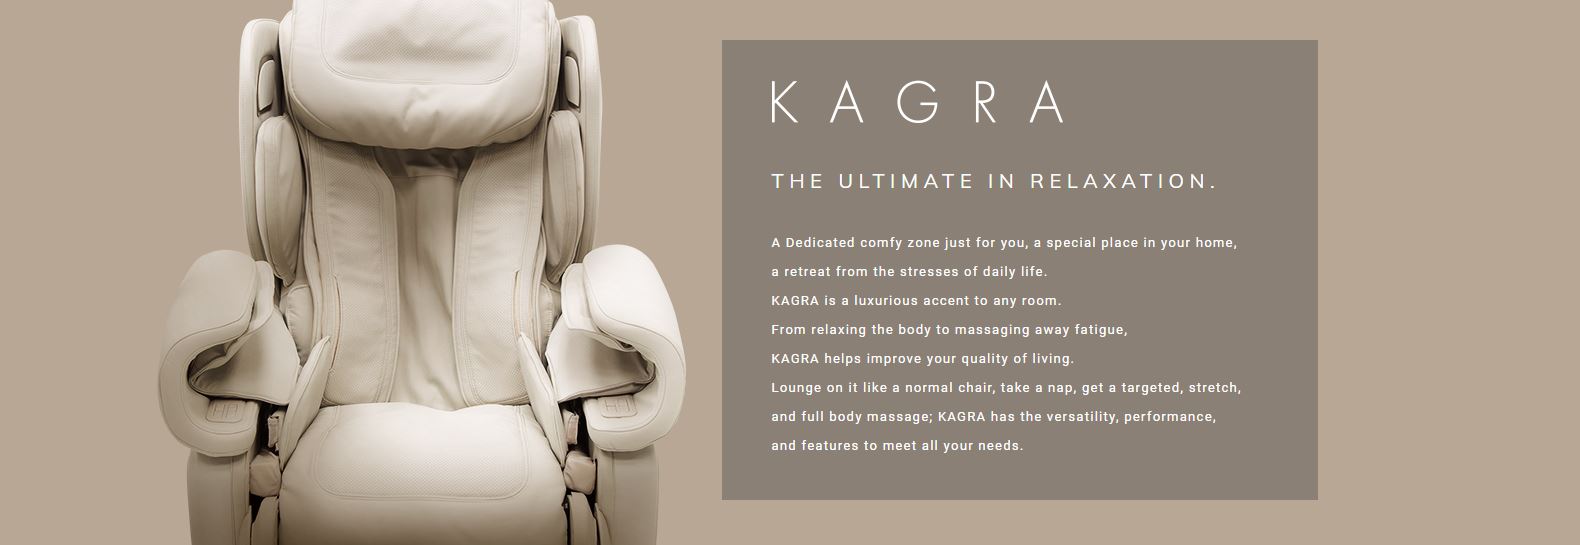 Kagra Massage Chair Features